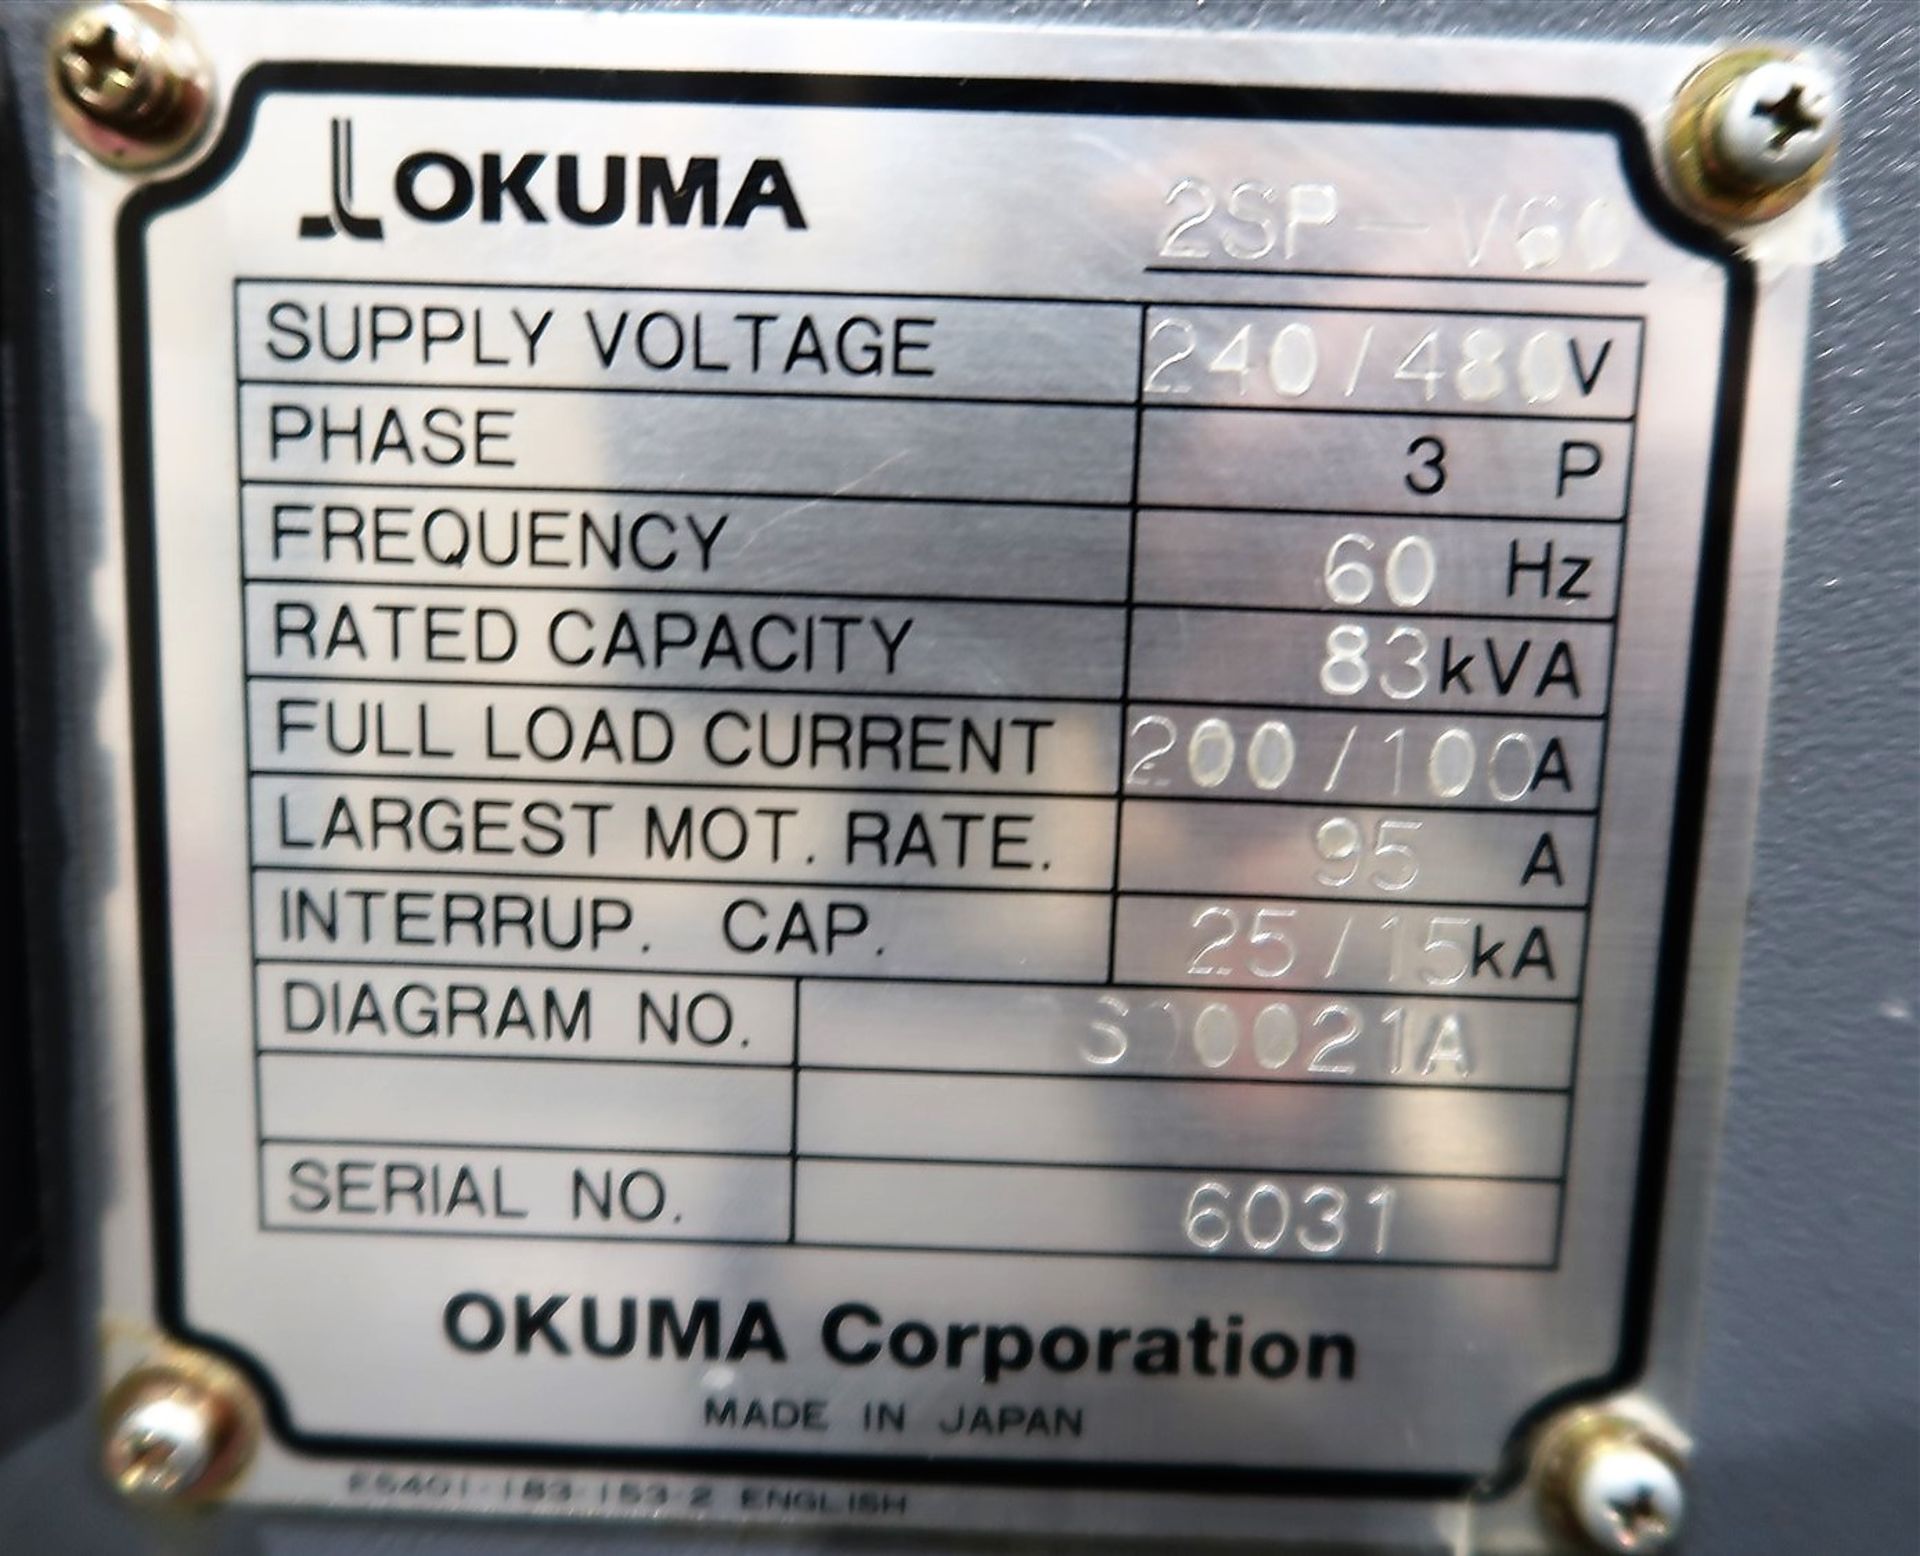 2006 OKUMA 2SP V60 TWIN SPINDLE CNC VERTICAL TURNING CENTERS, FANUC 18i TB CNC CONTROL, 12-STATION - Image 8 of 9